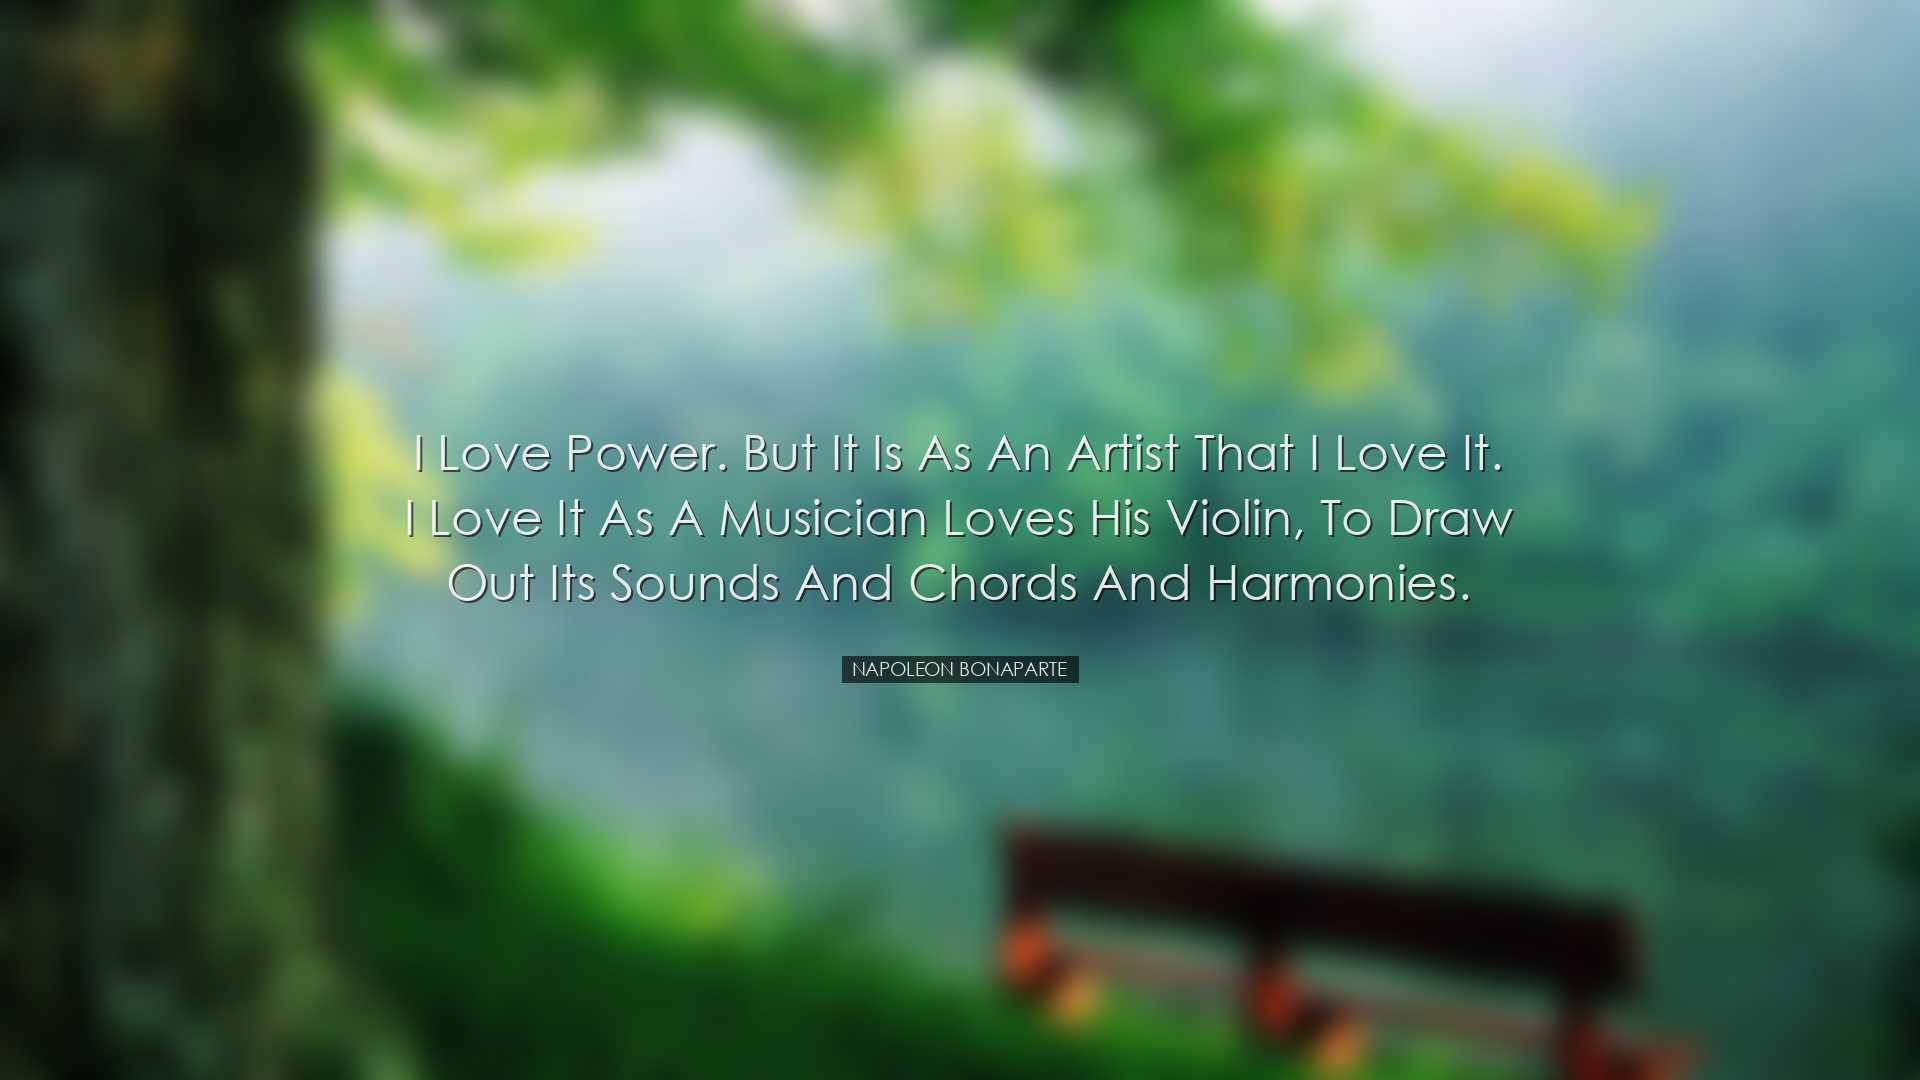 I love power. But it is as an artist that I love it. I love it as